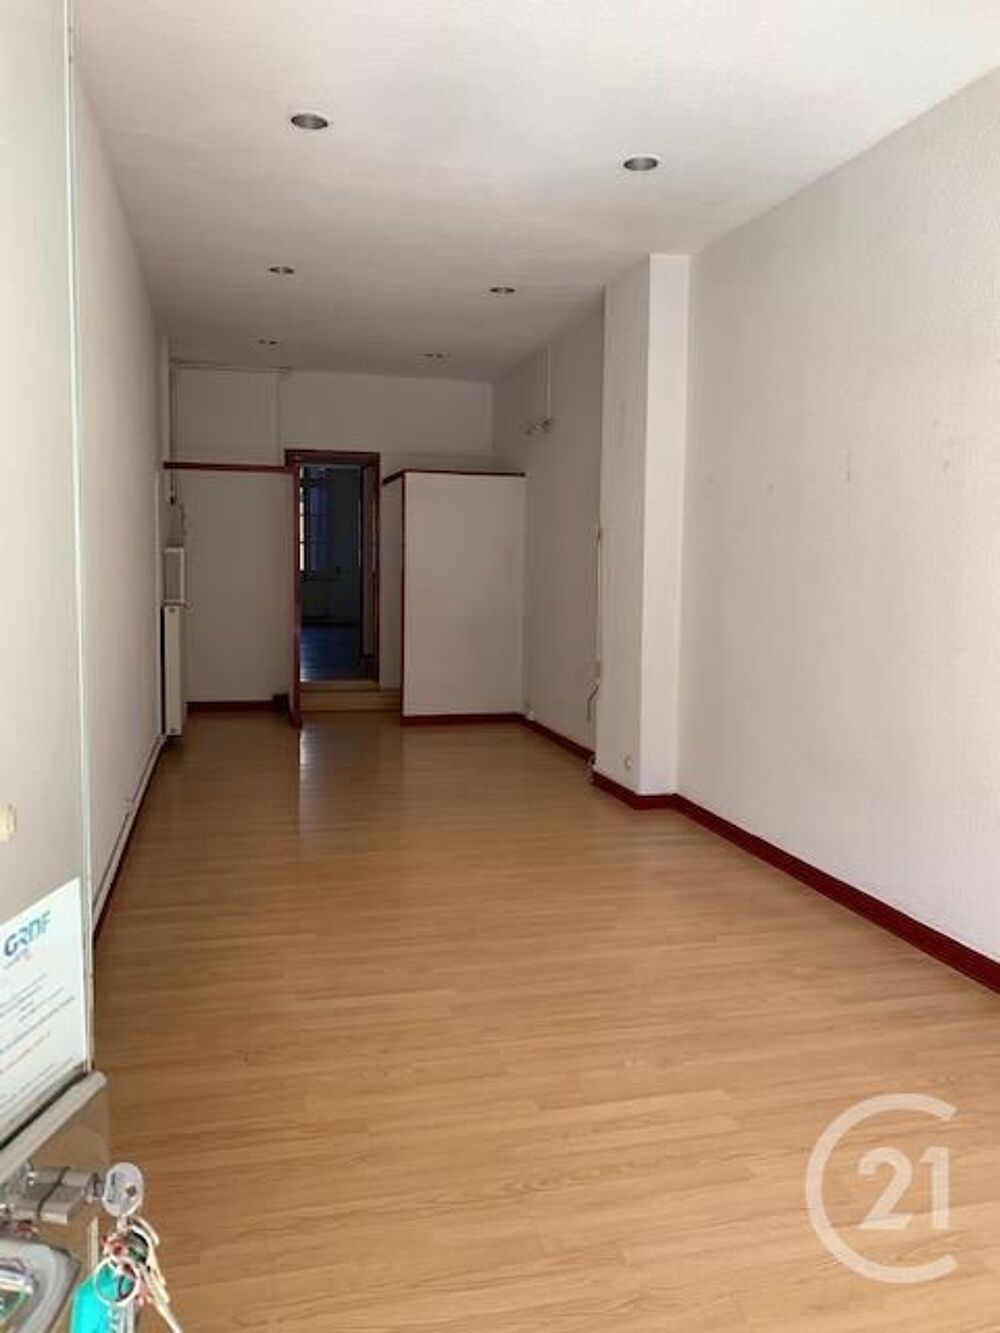 location Appartement - 2 pice(s) - 51 m Montluon (03100)